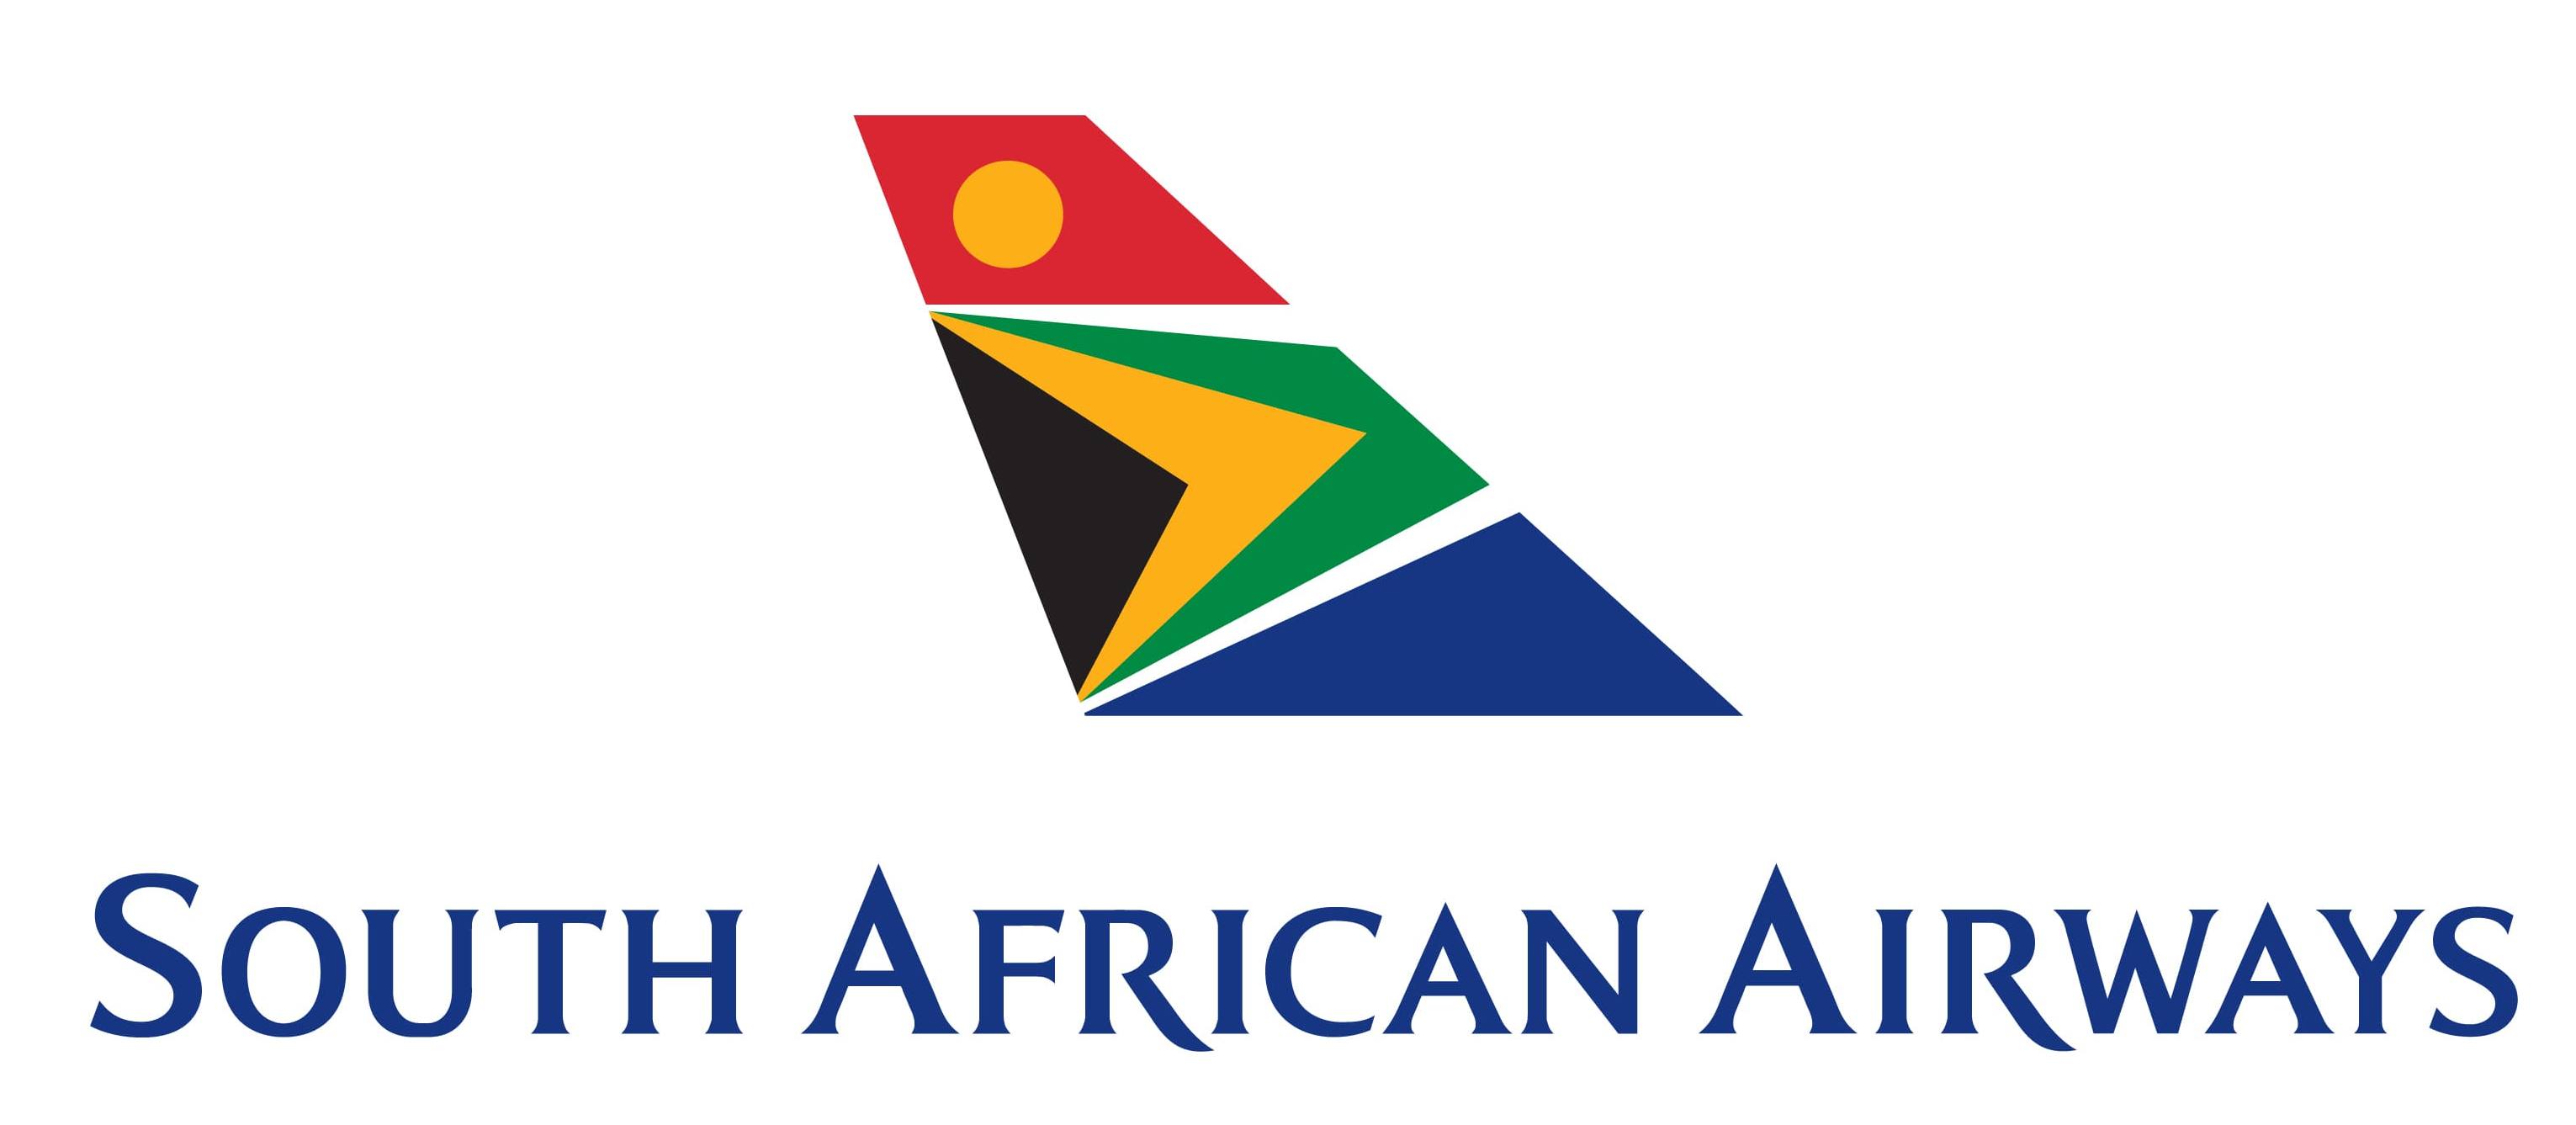 South African Airways Logo - KibrisPDR